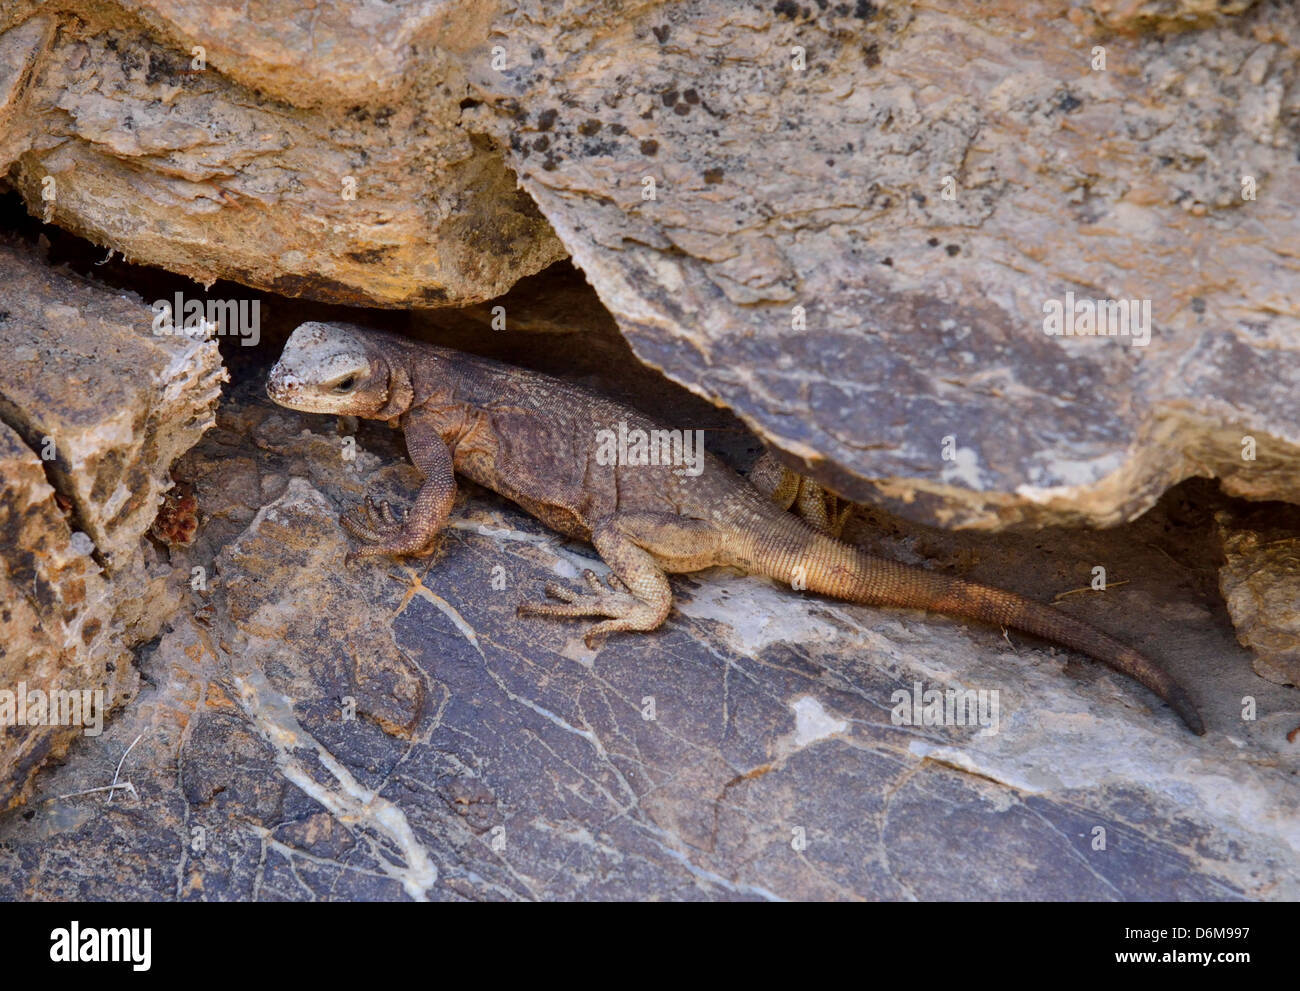 A Chuckwalla lizard (Sauromalus ater) hides inside a rock crevice. Death Valley National Park, California, USA. Stock Photo